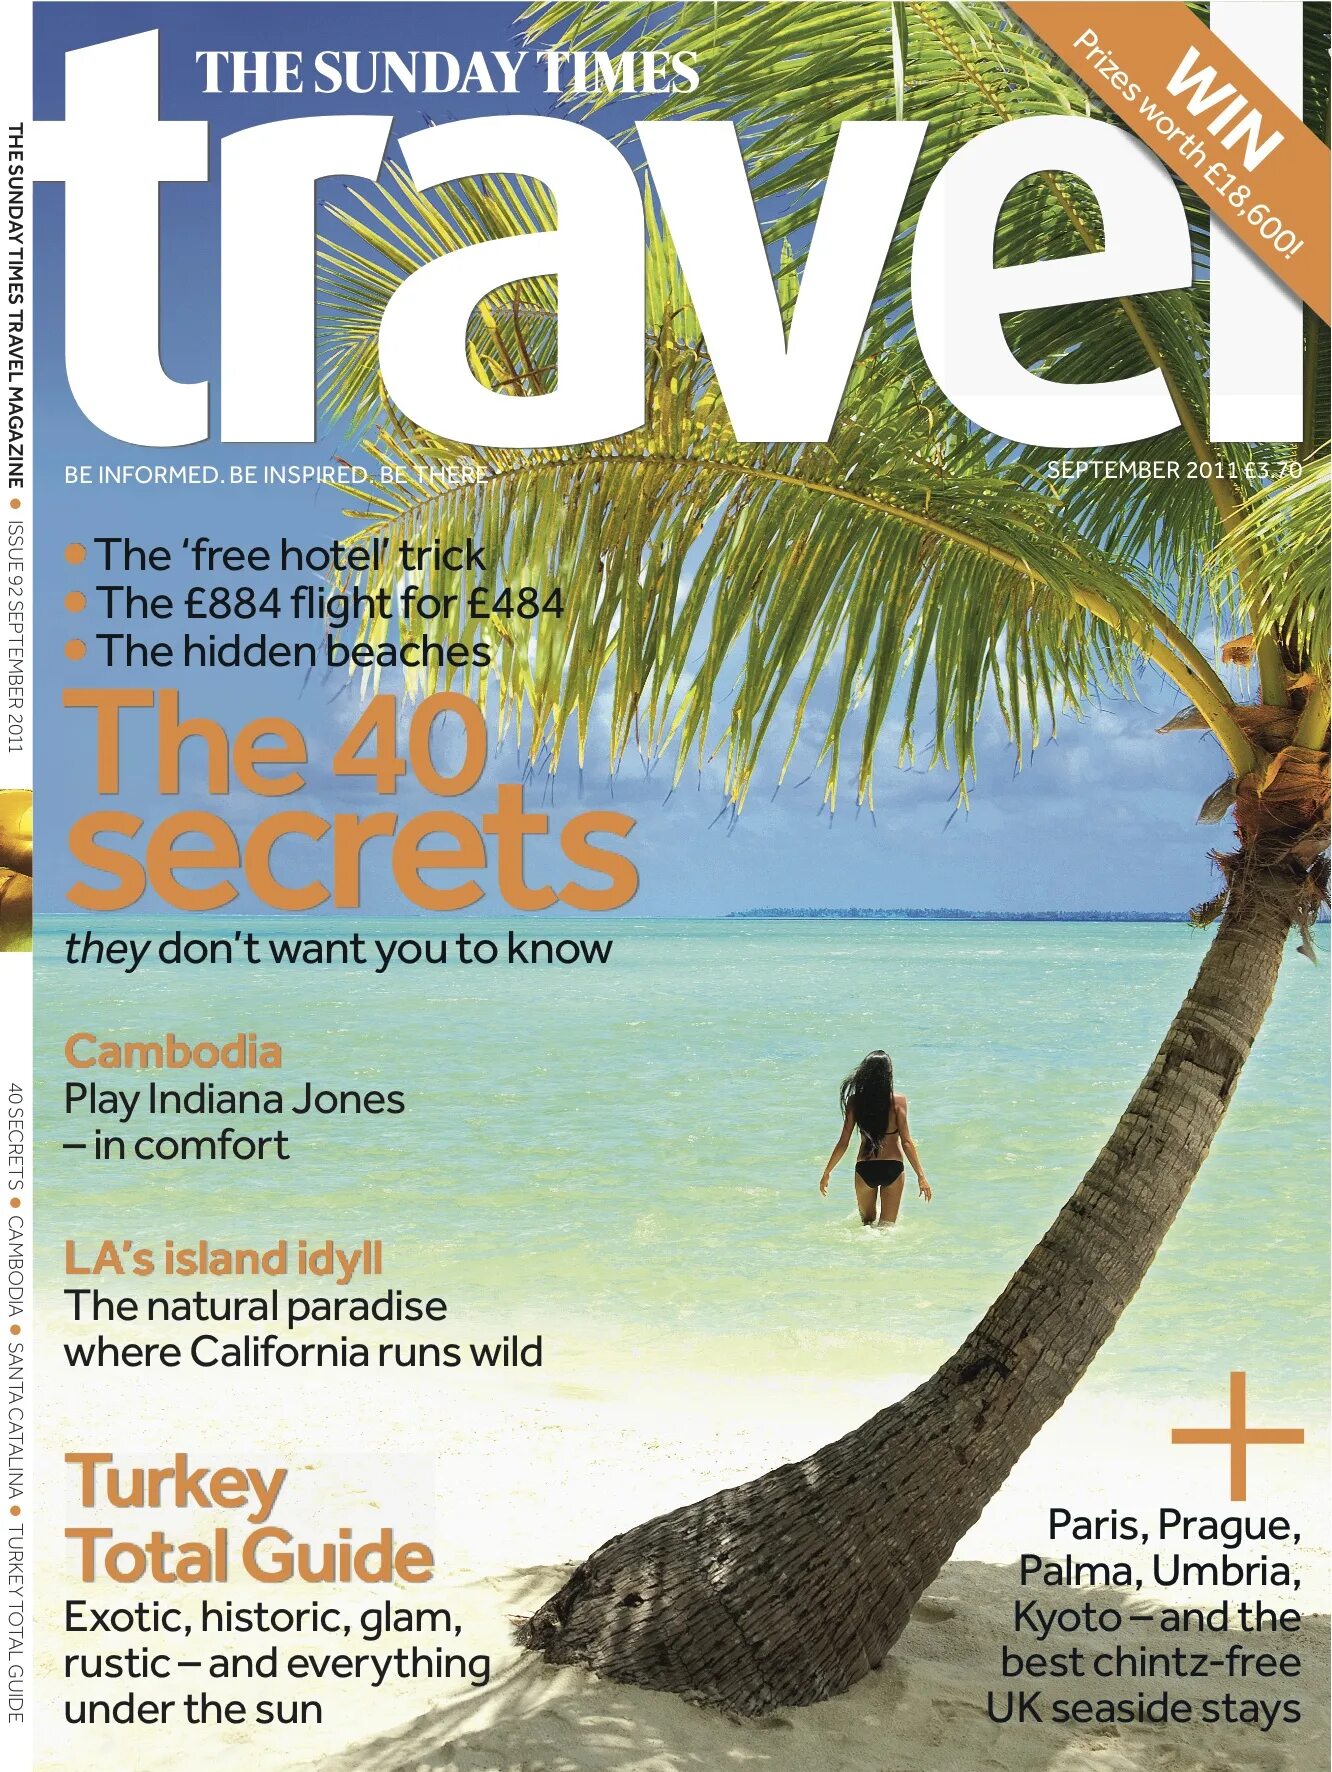 Www magazines. Журнал о путешествиях. Travel журналы. Travel Magazine обложка. Журнал туризм.